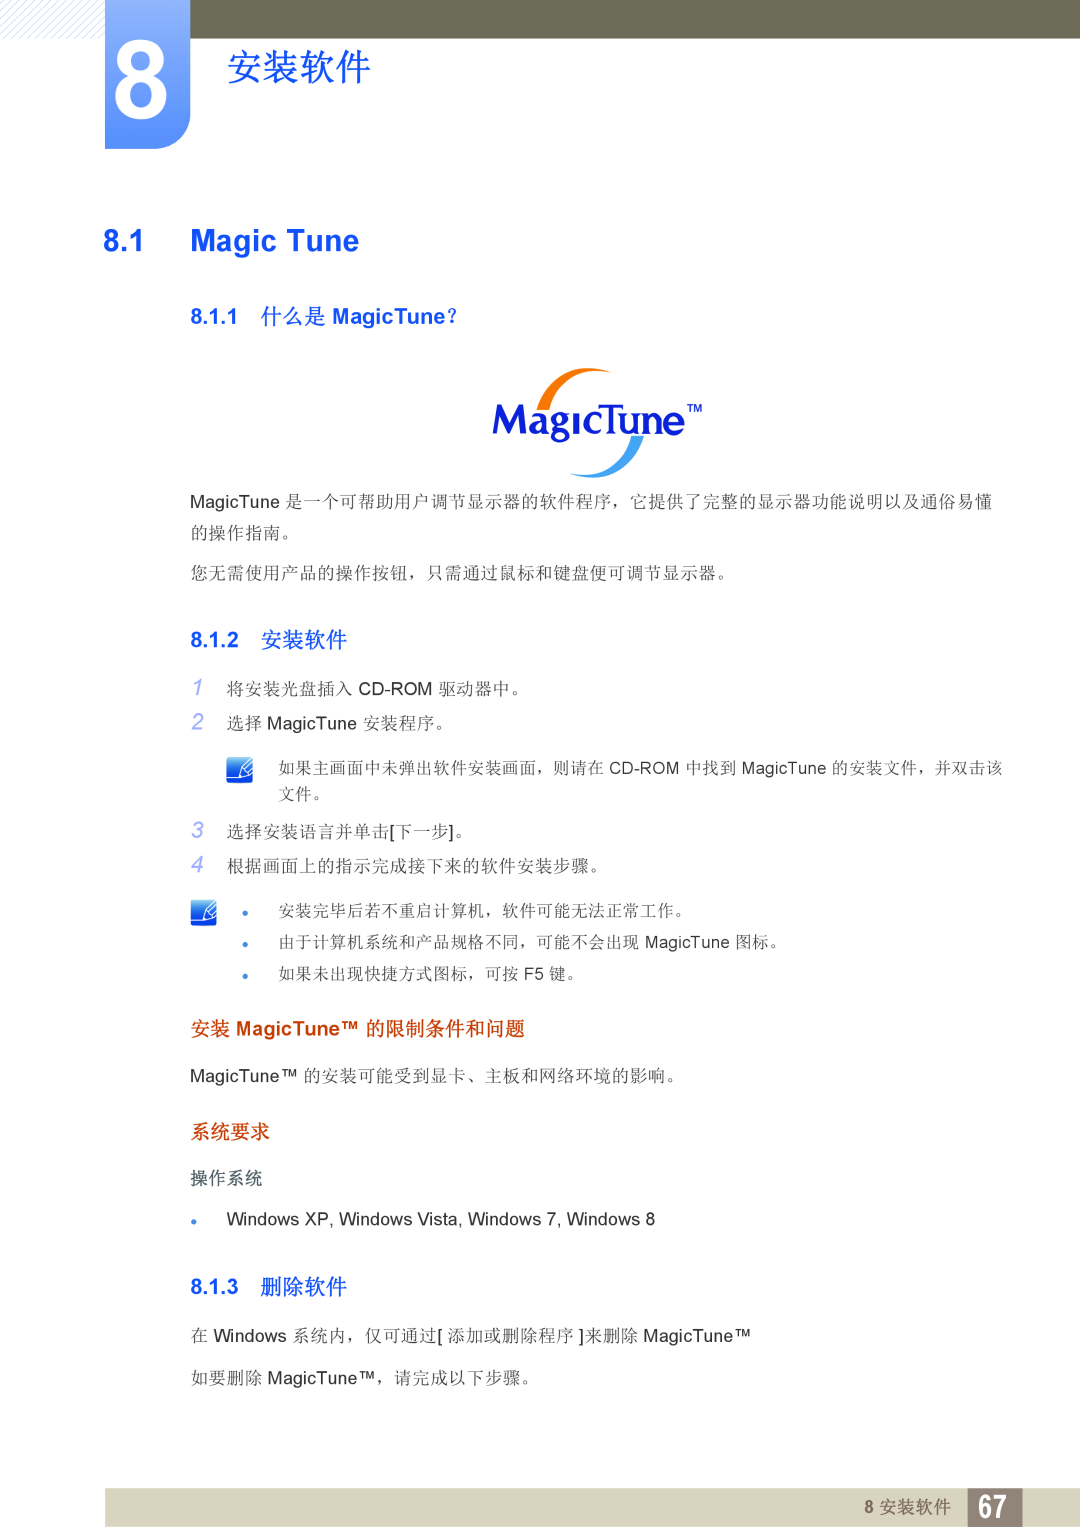 Samsung LS24C45KBL/EN 8 安装软件, Magic Tune, 8.1.1 什么是 MagicTune？, 8.1.2 安装软件, 8.1.3 删除软件, 安装 MagicTune 的限制条件和问题, 系统要求, 操作系统 